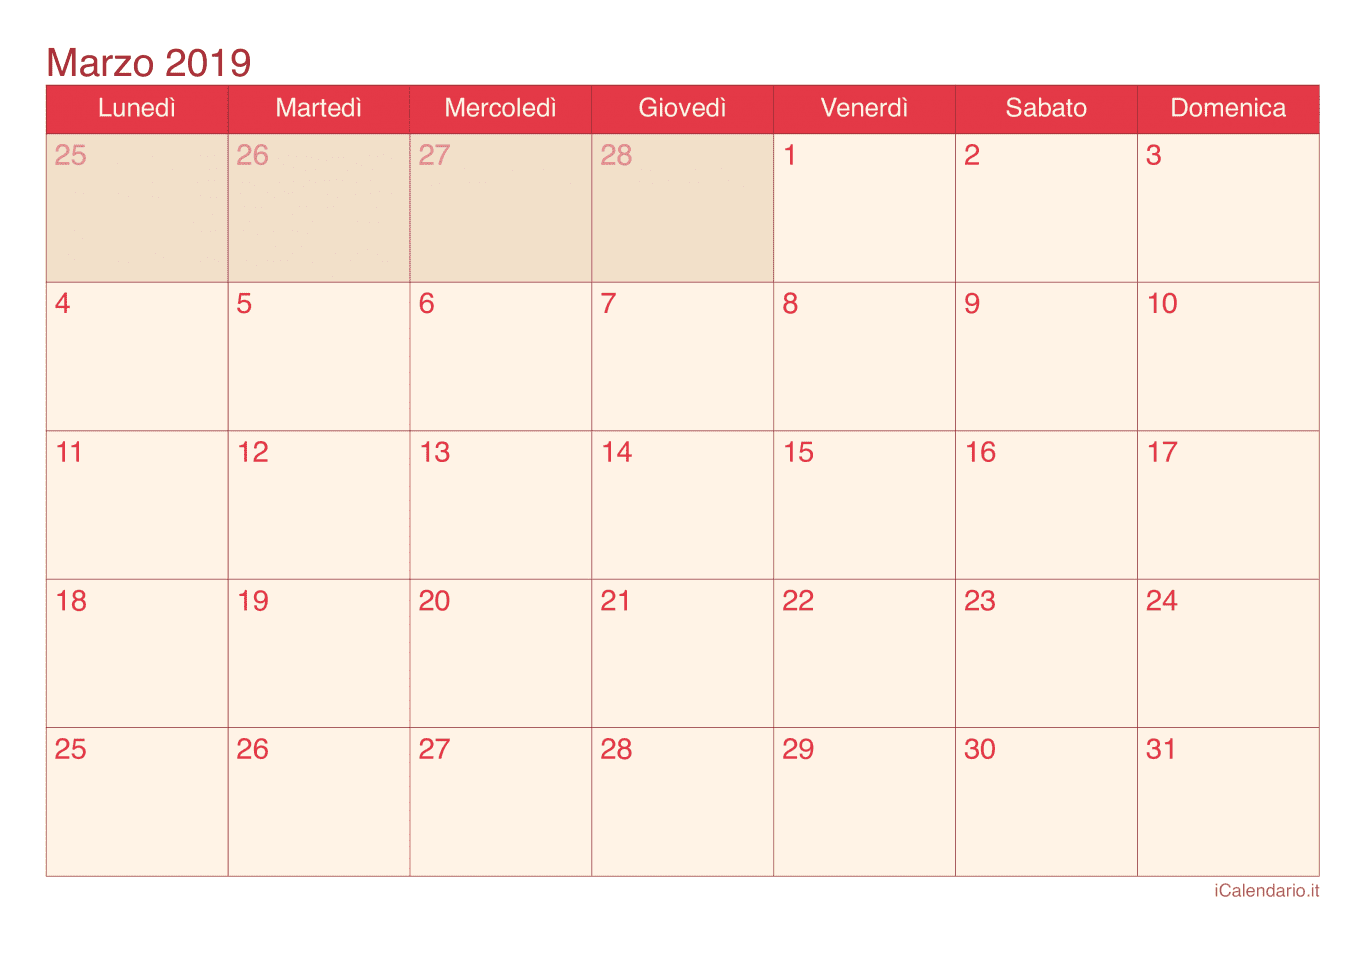 Calendario di marzo 2019 - Cherry